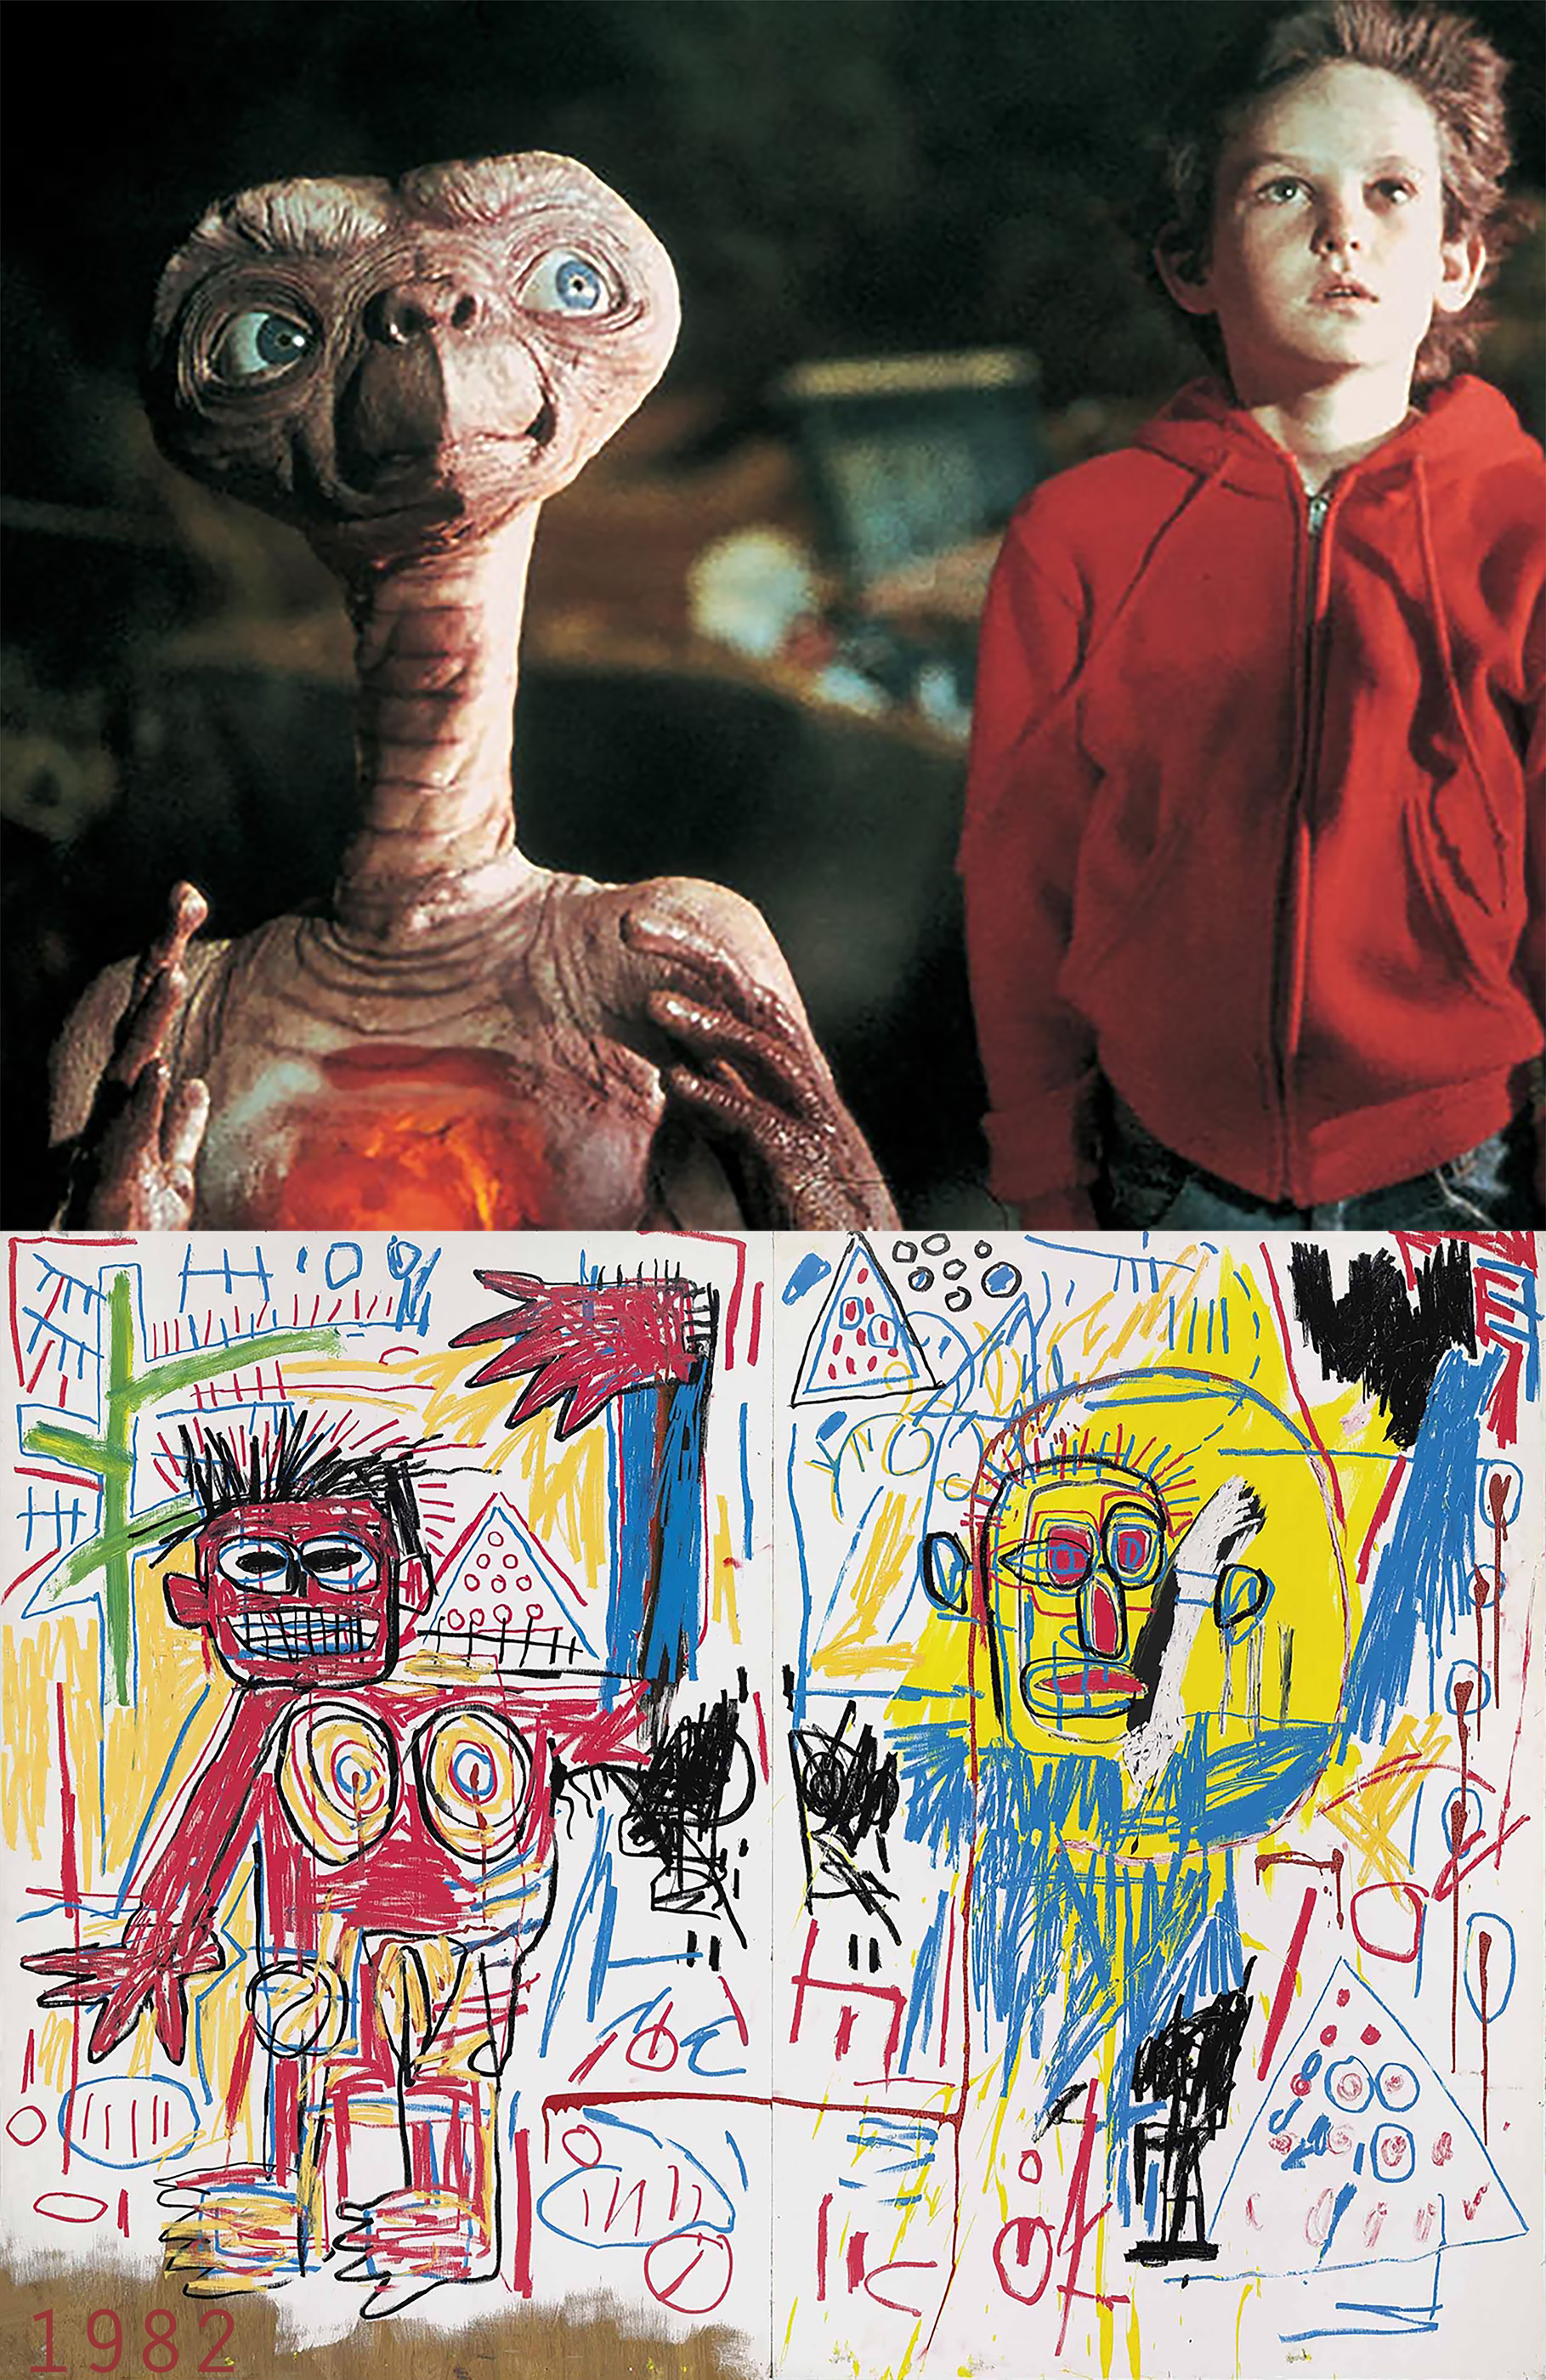 Bonnie Lautenberg, 1982 – E.T. – Jean-Michel Basquiat, Untitled 1982, Photographic print, 52 x 36 in.